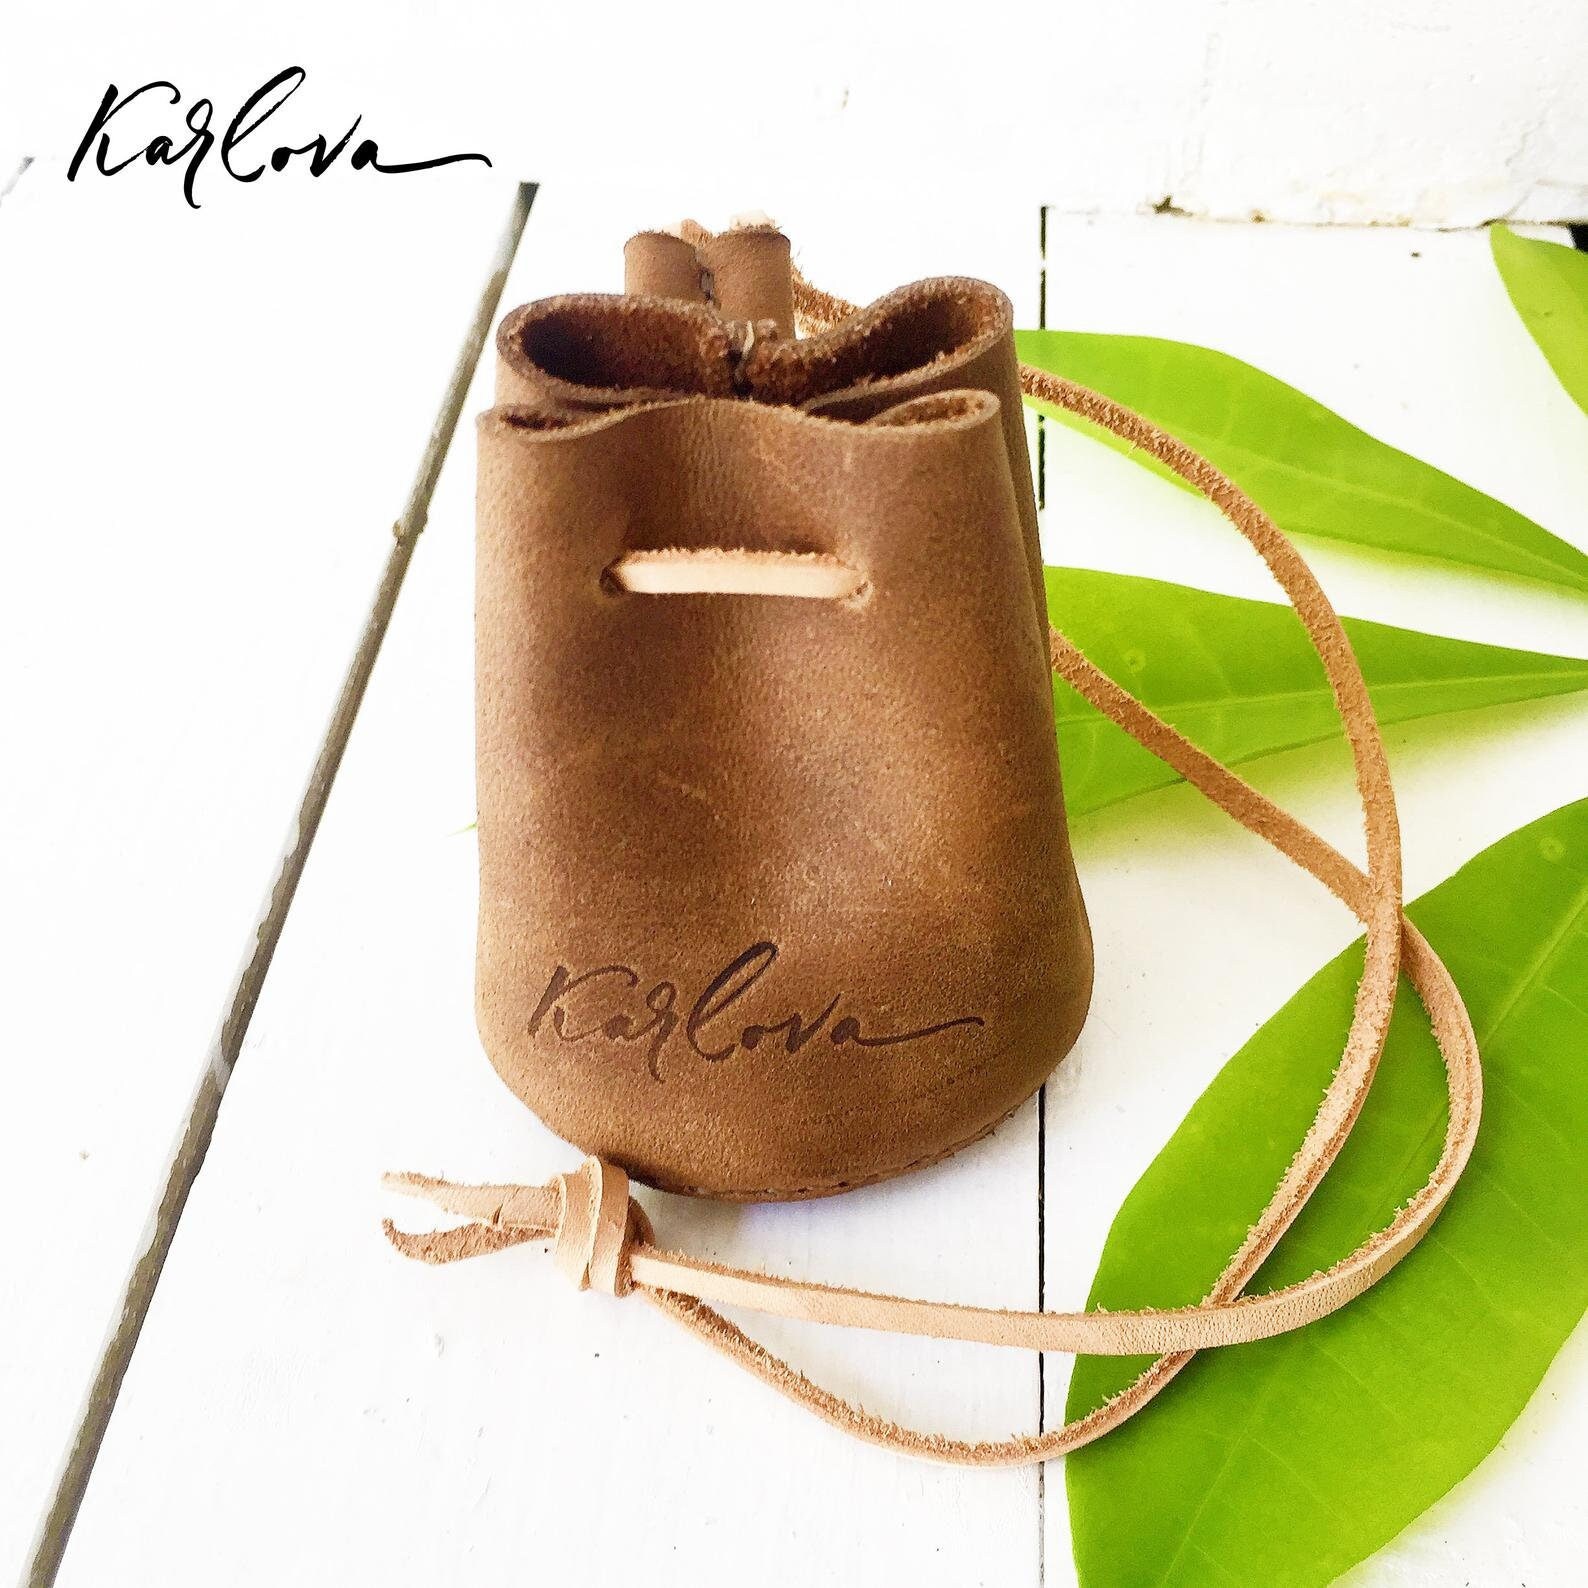 Karlova Trapezium Leather Bag Making Tutorial - Leather Craft DIY